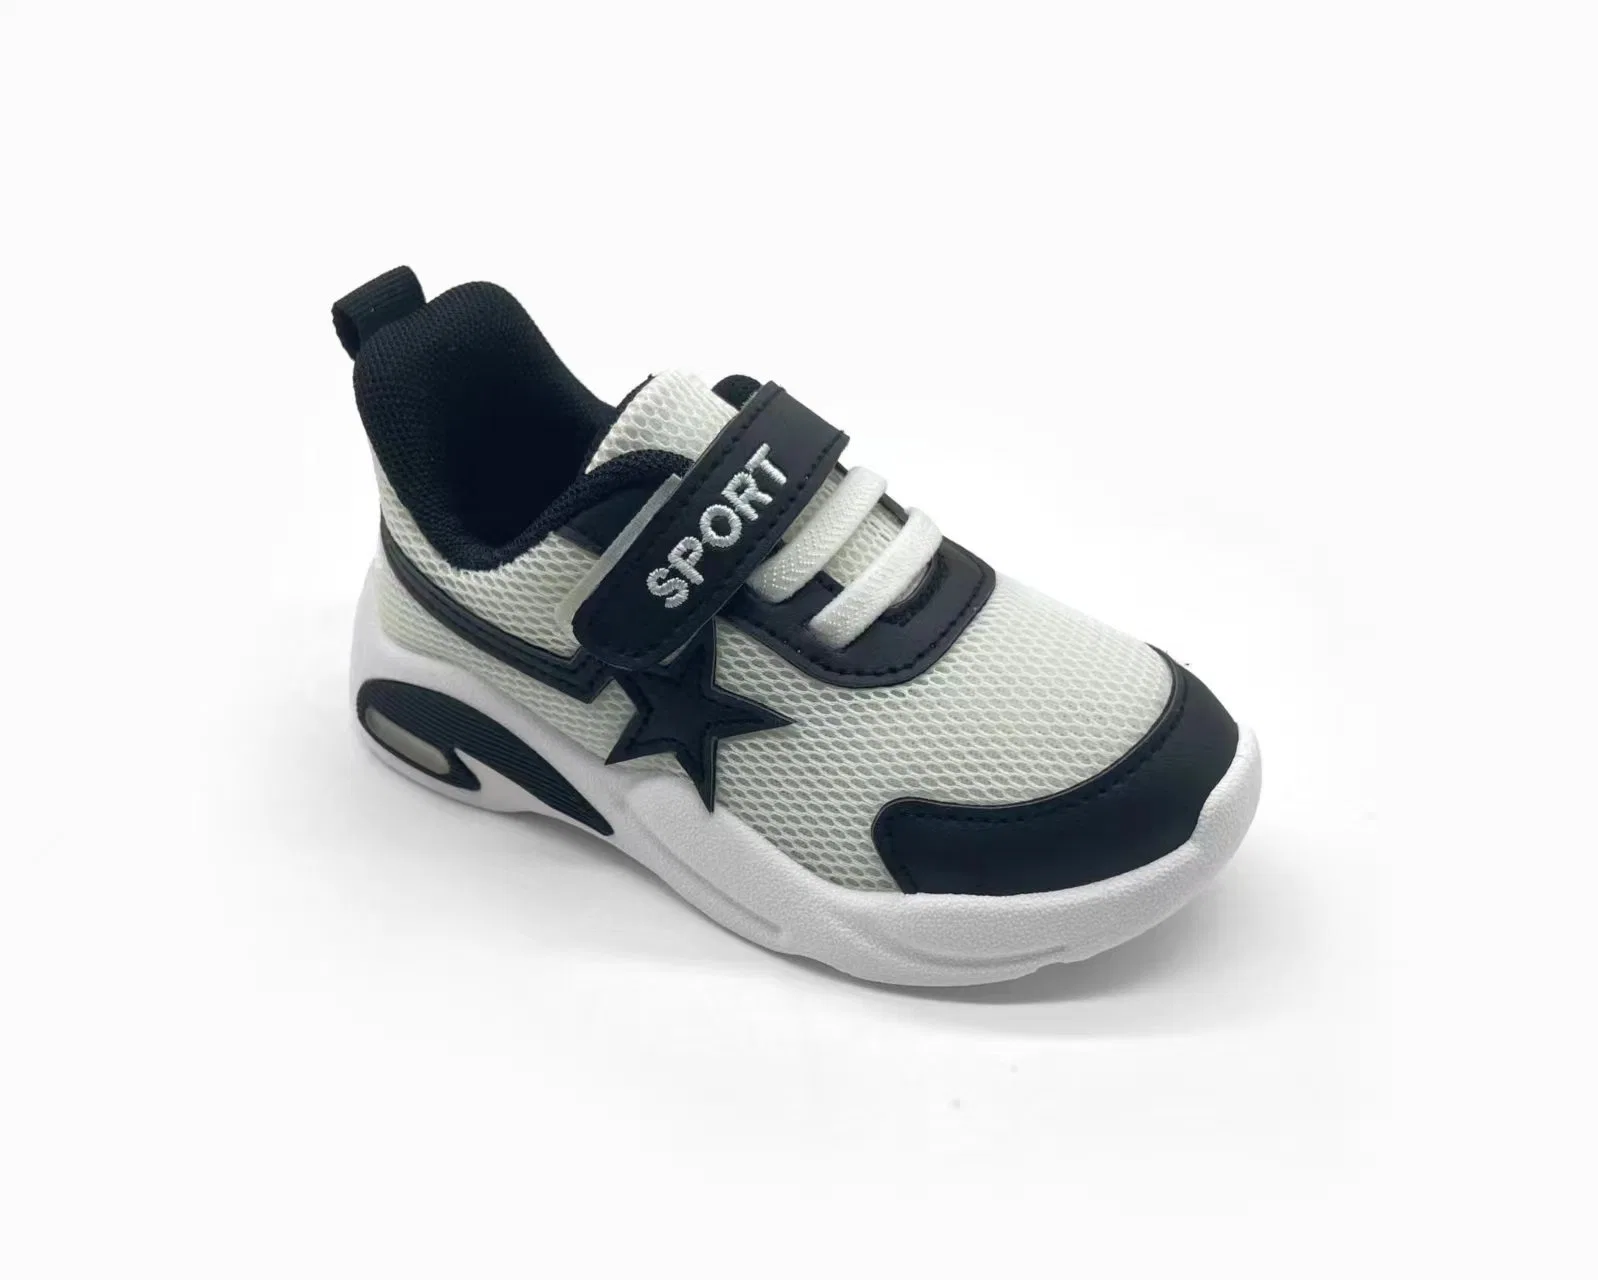 New Wholesales Moda Zapatos bebé Toddler Sneaker Factory ropa de vestir OEM Zapato ligero